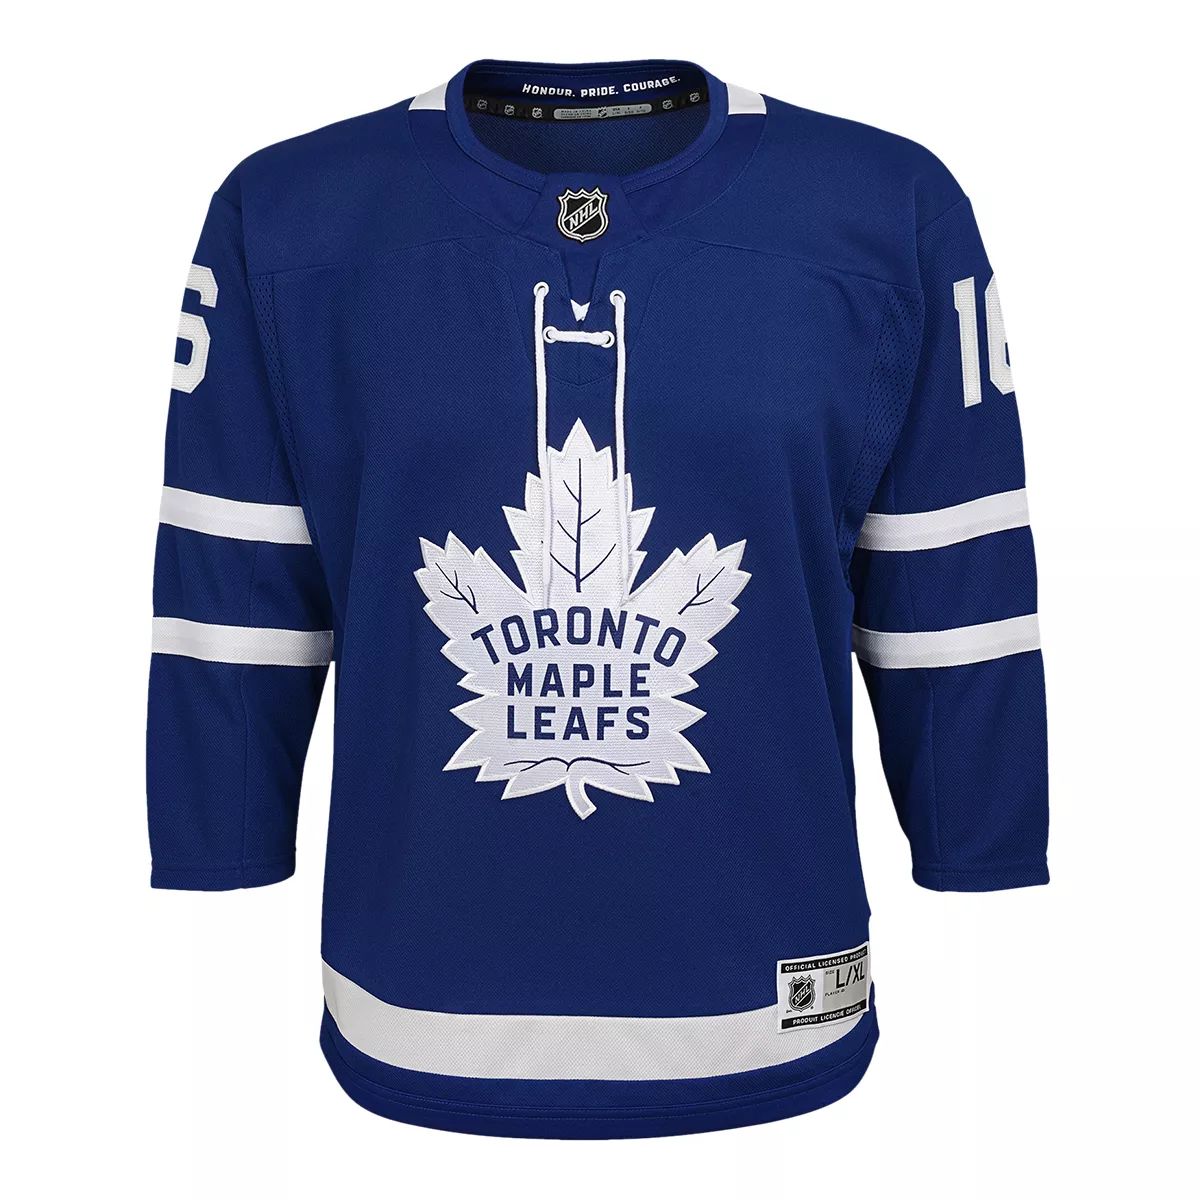 Toronto Maple Leafs Authentic Nike Hockey Jersey, Size Large